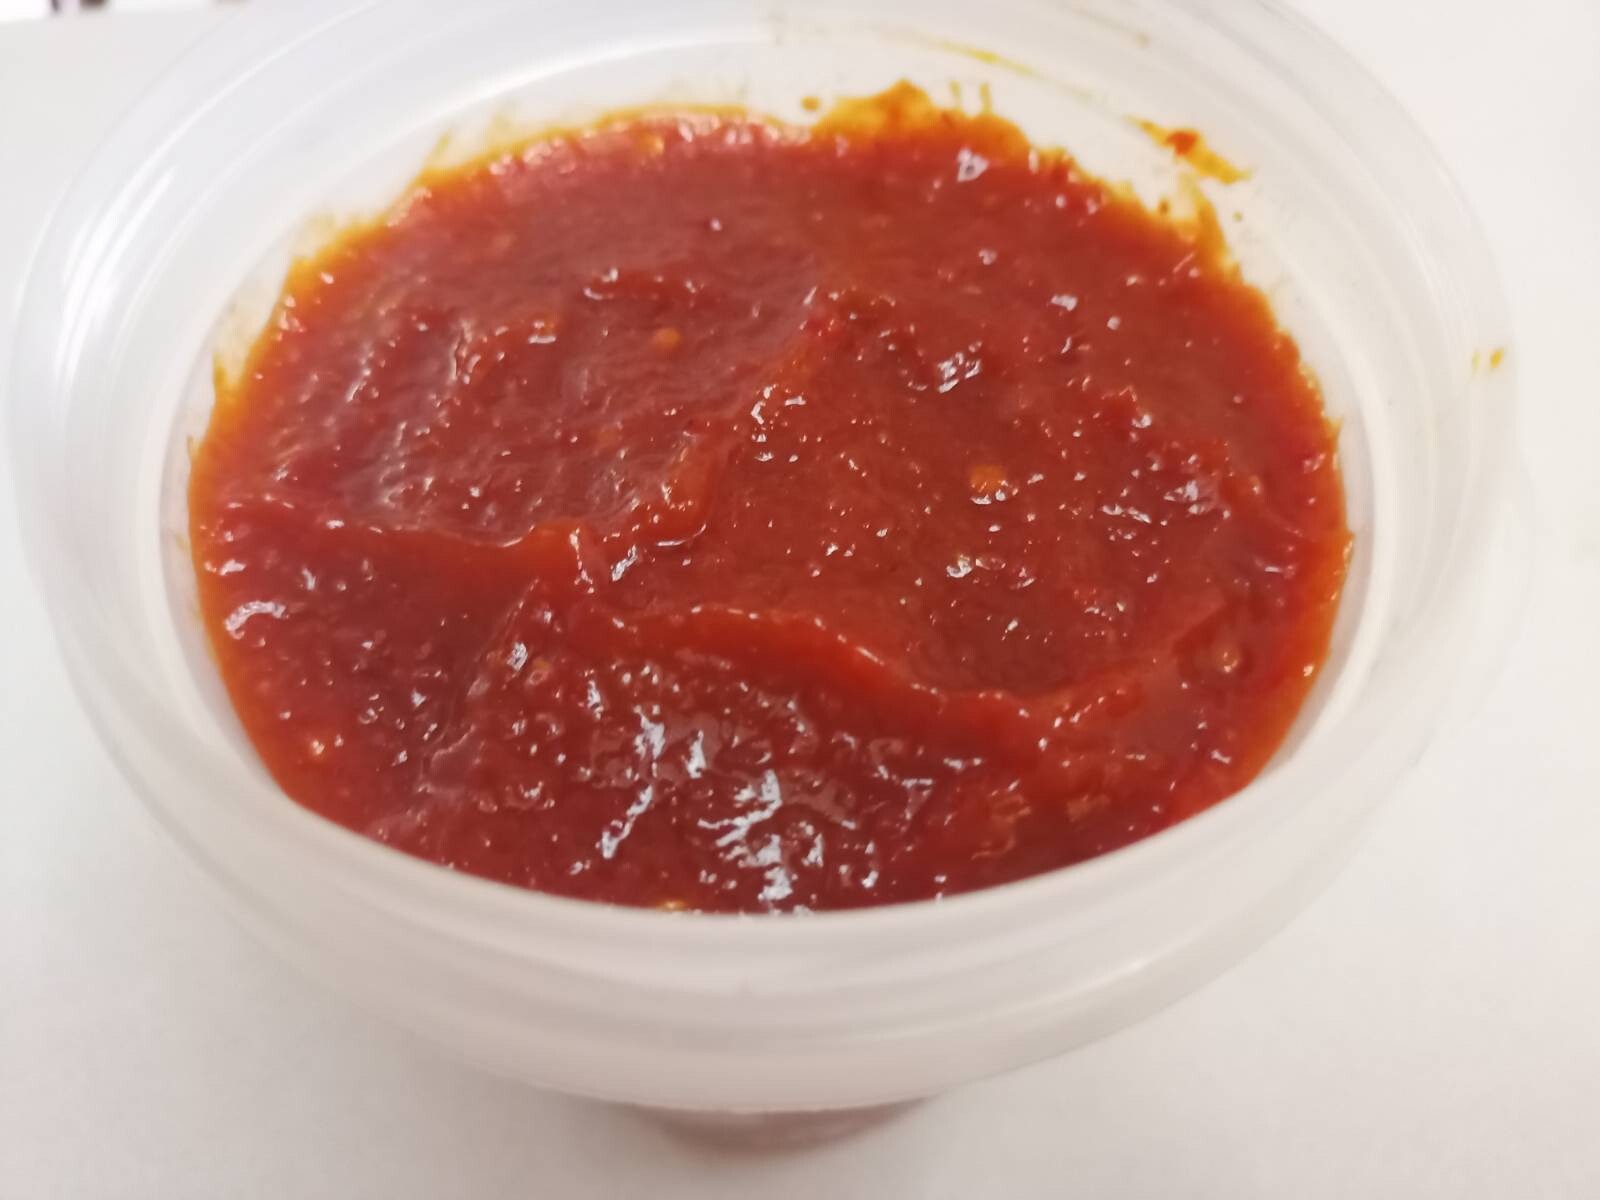 A red, tomato based sauce dominates the scene